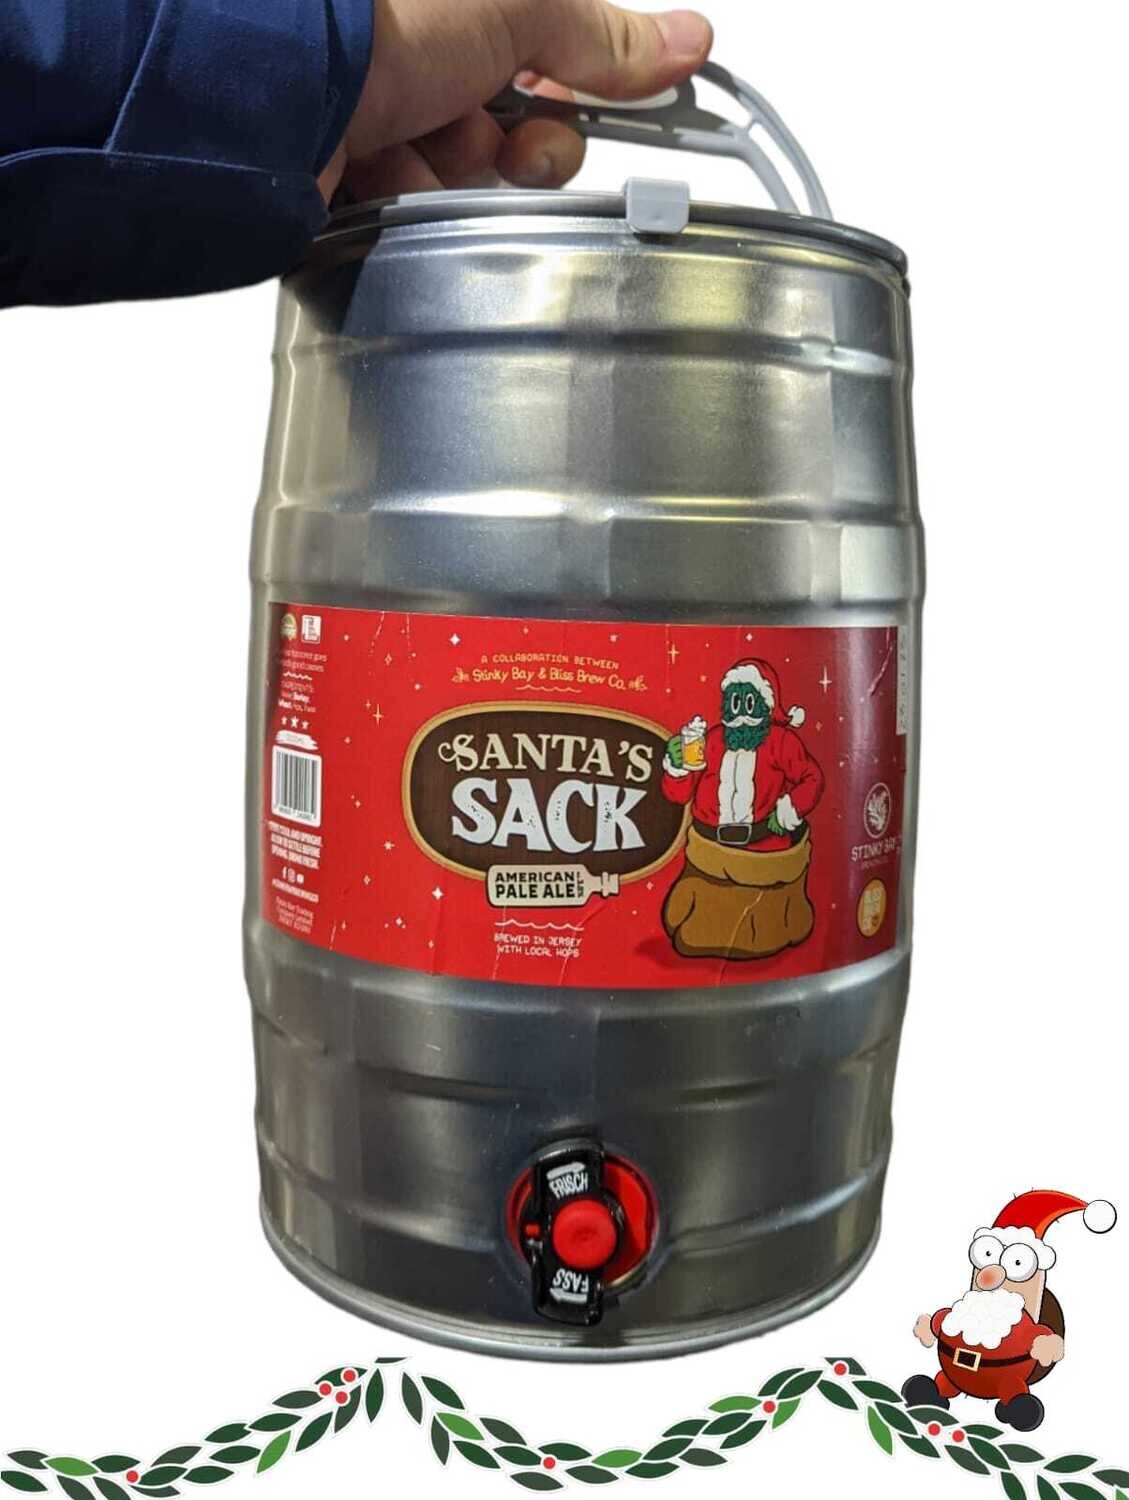 Santa's Sack mini-keg